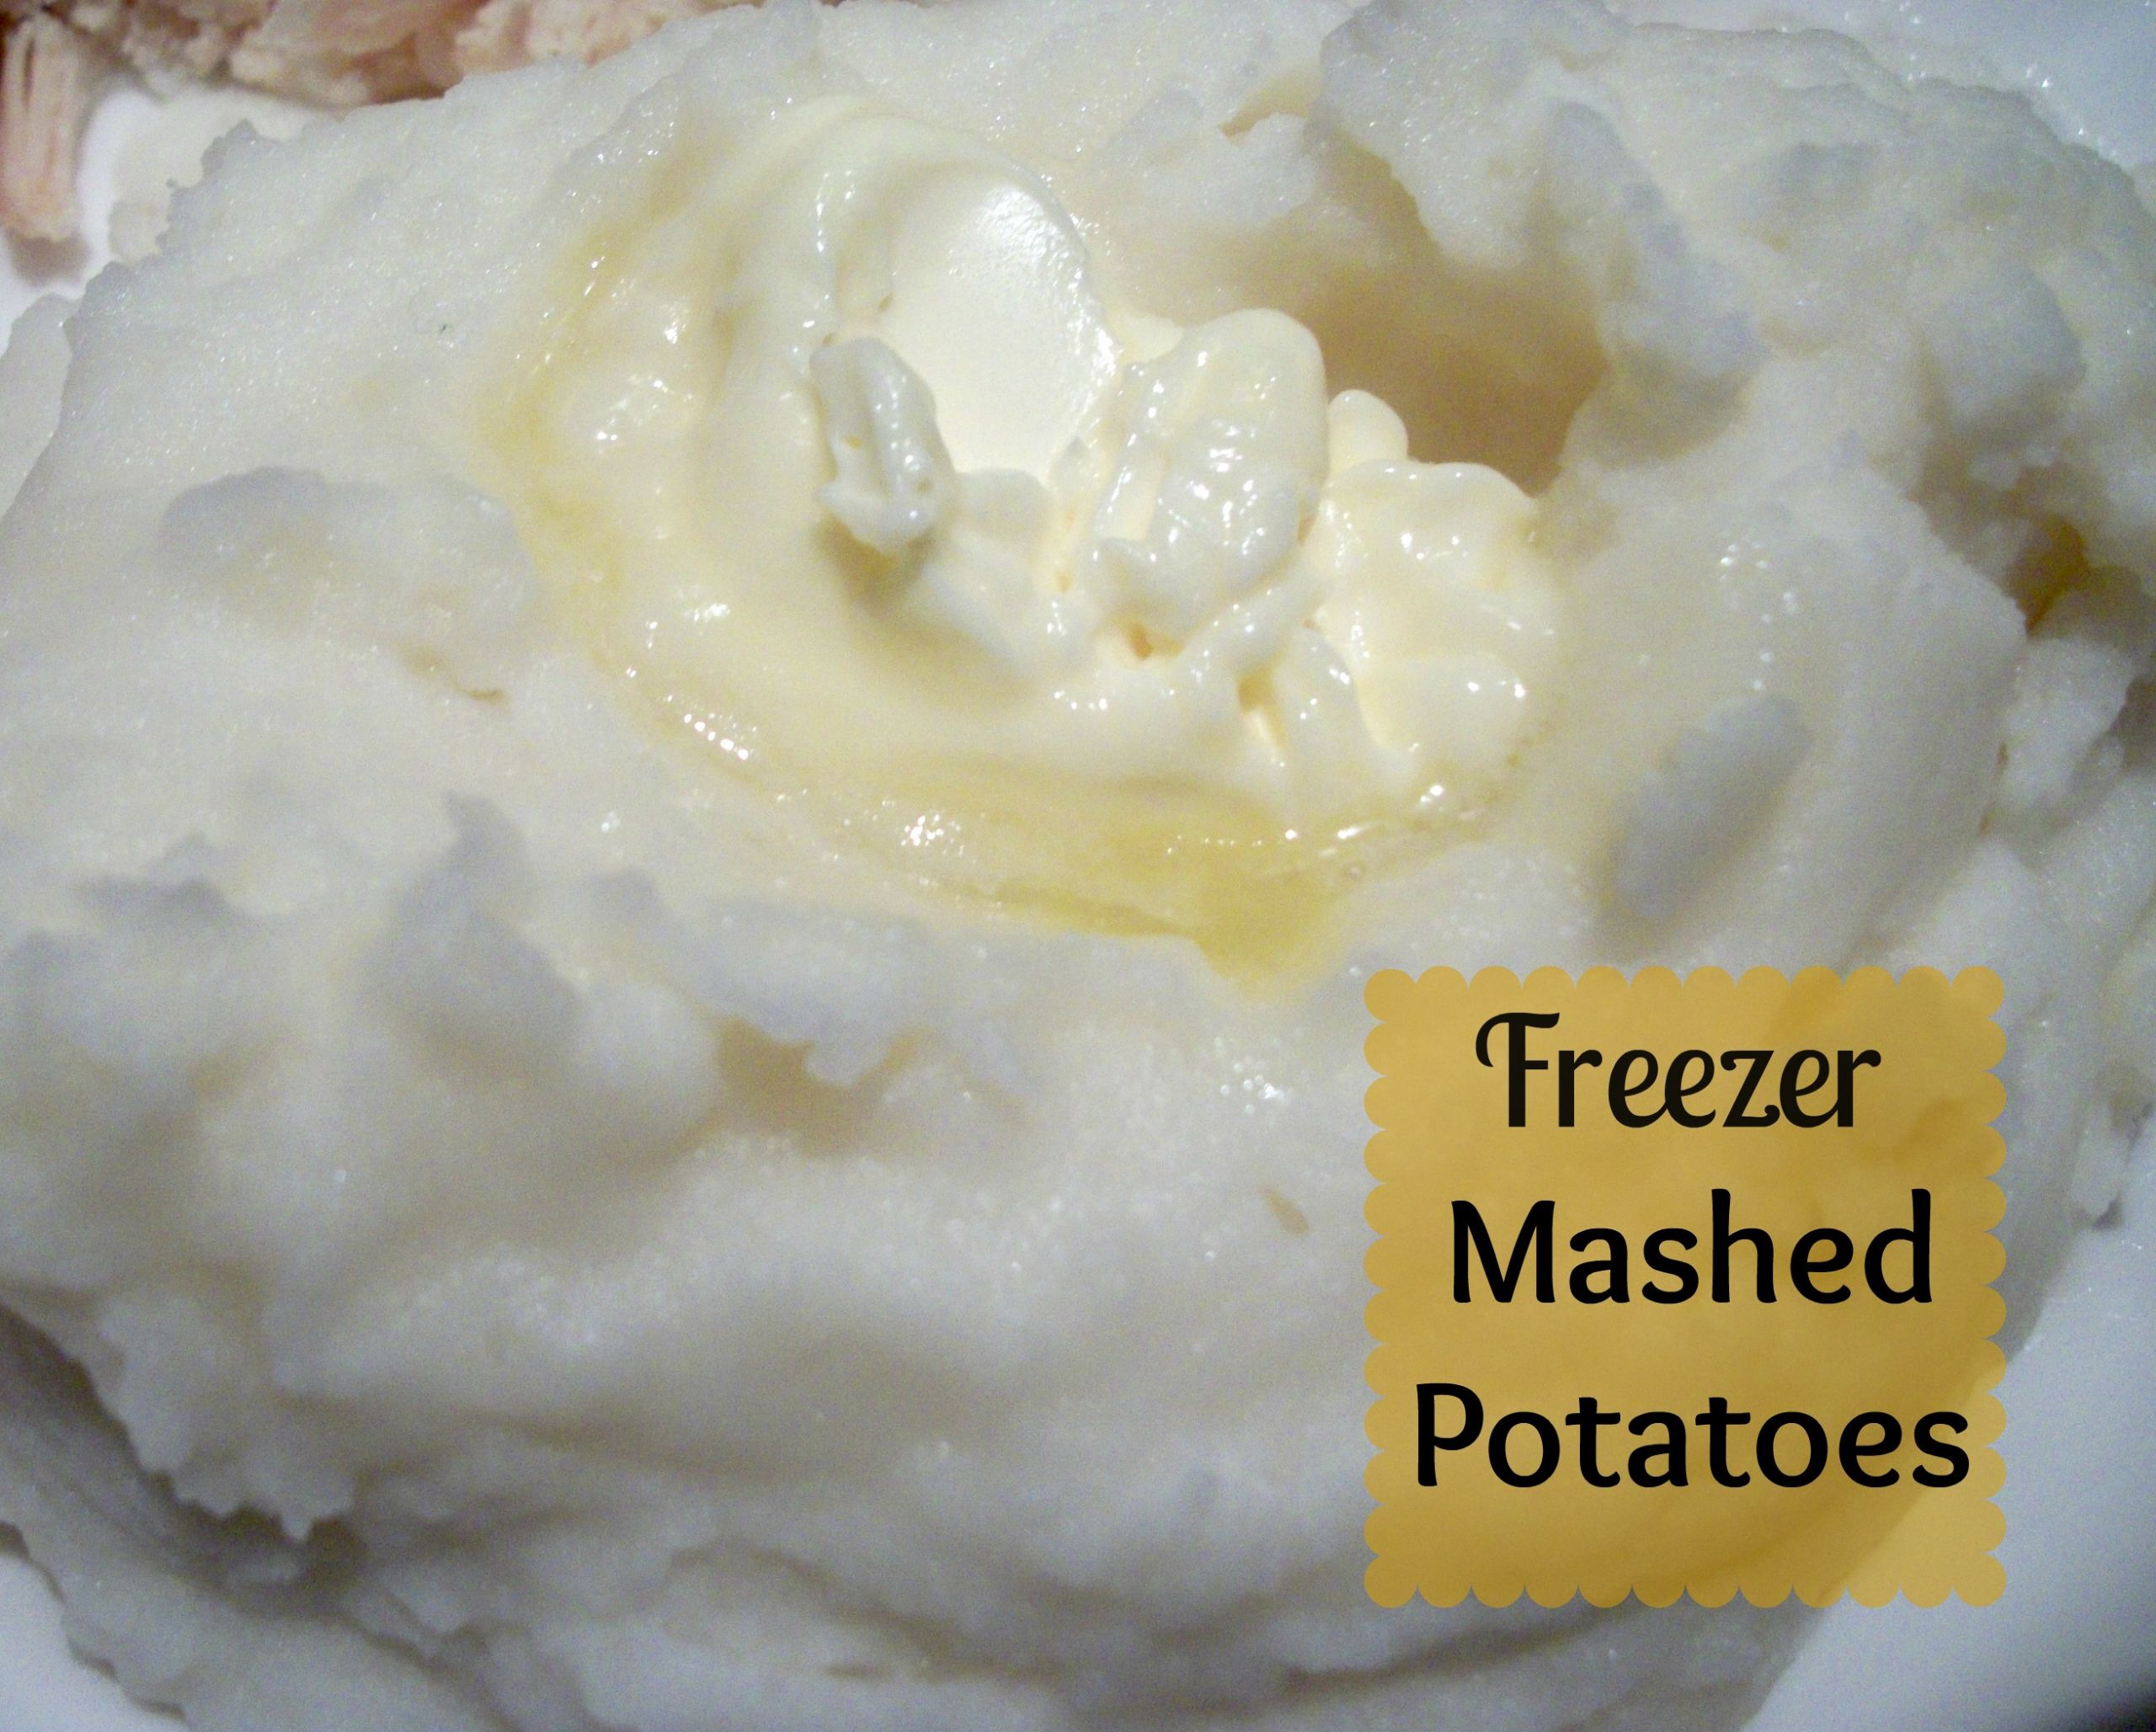 Freezer Mashed Potatoes
 Make Ahead Freezer Mashed Potatoes